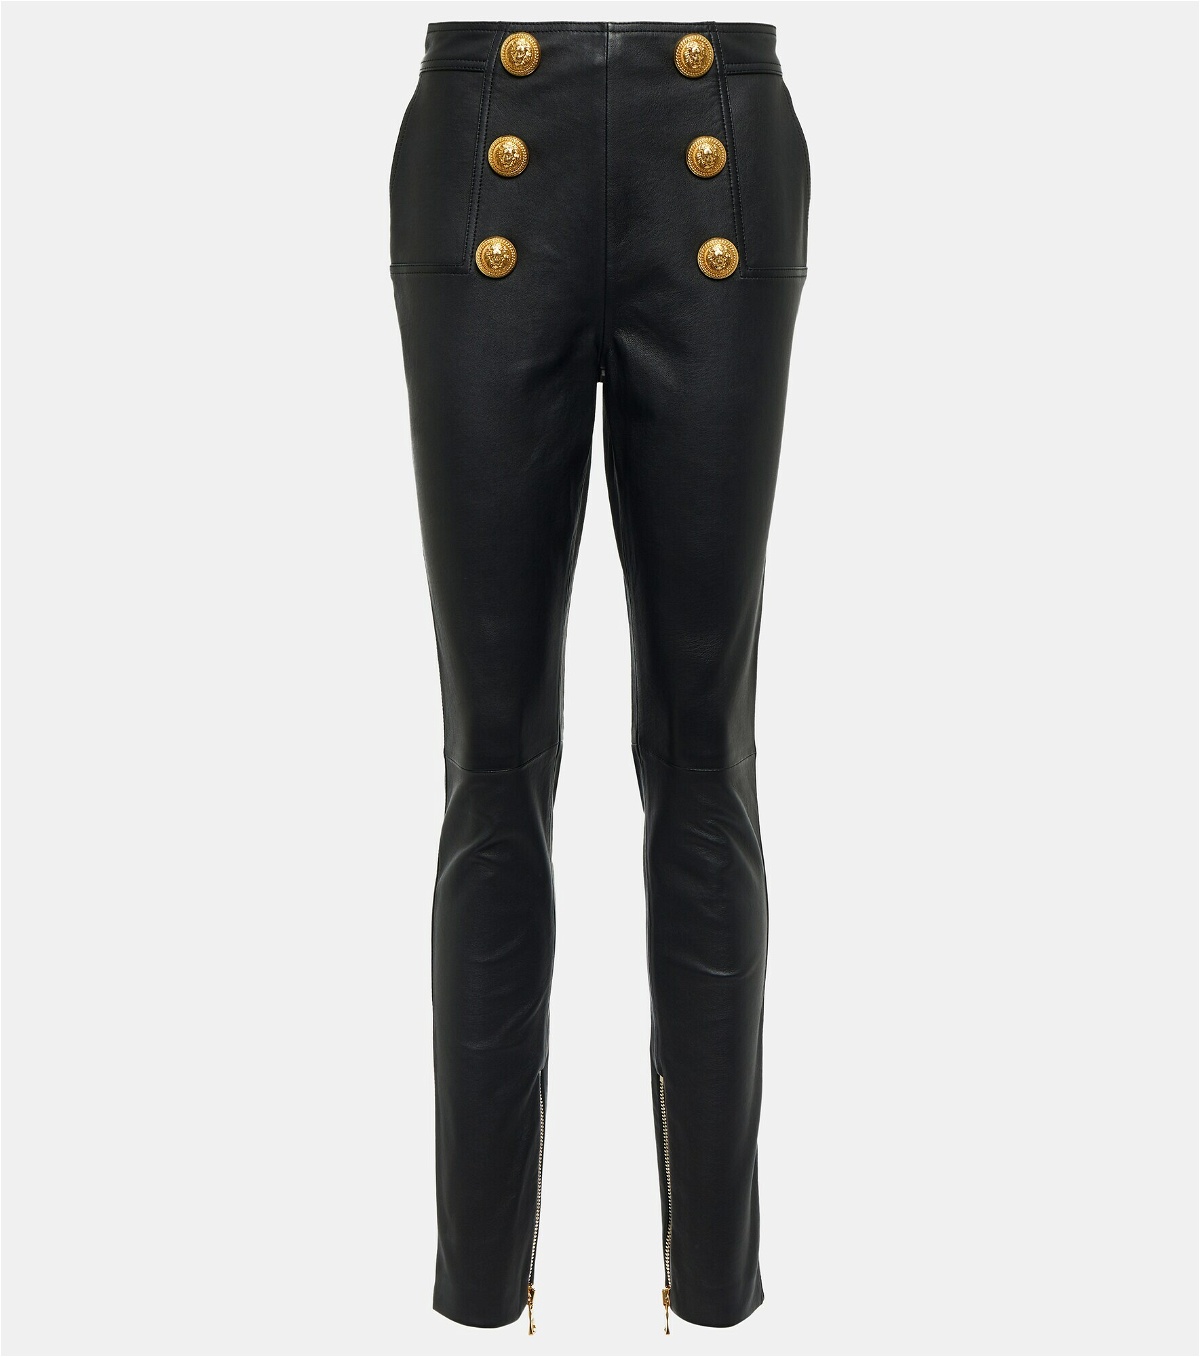 Balmain Leather Pants in Black